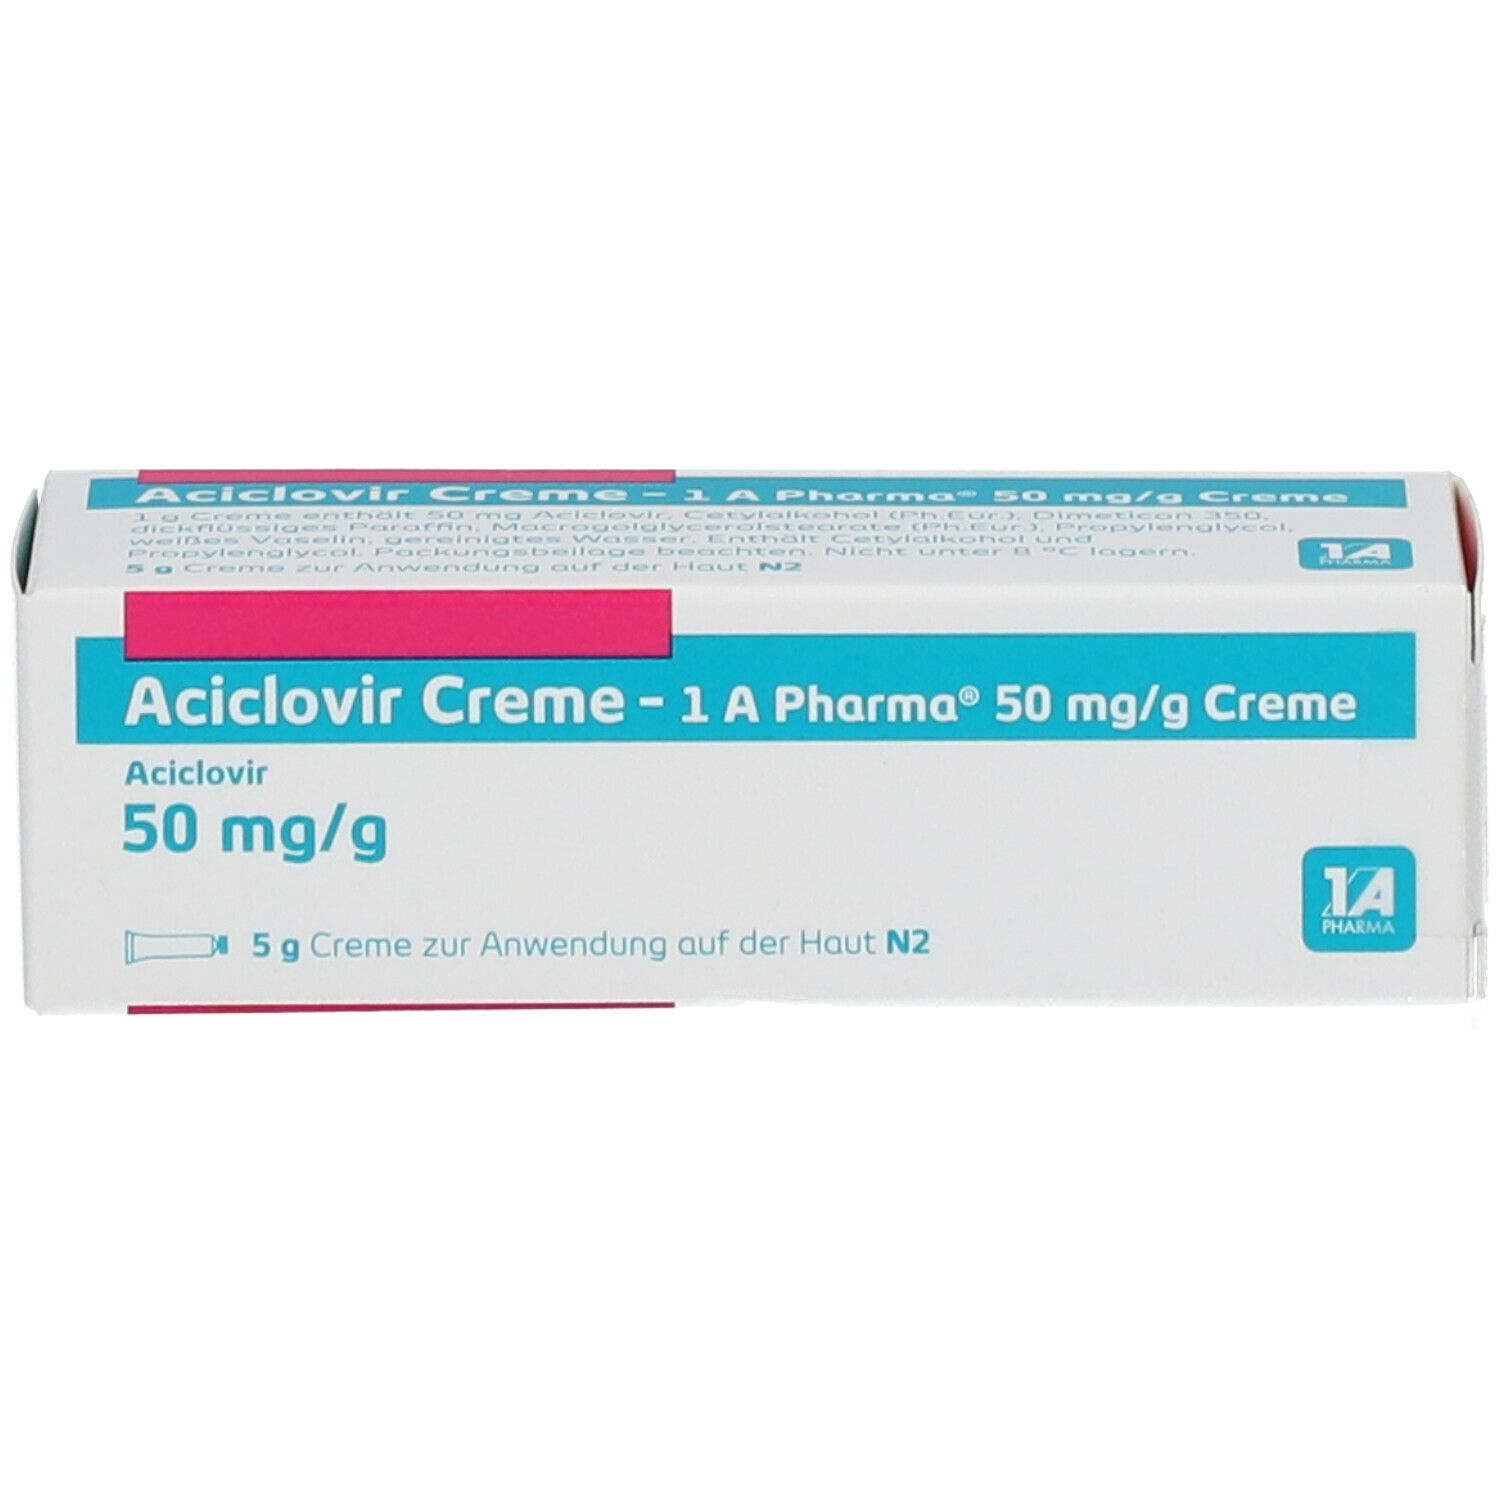 Aciclovir Creme 1A Pharma®